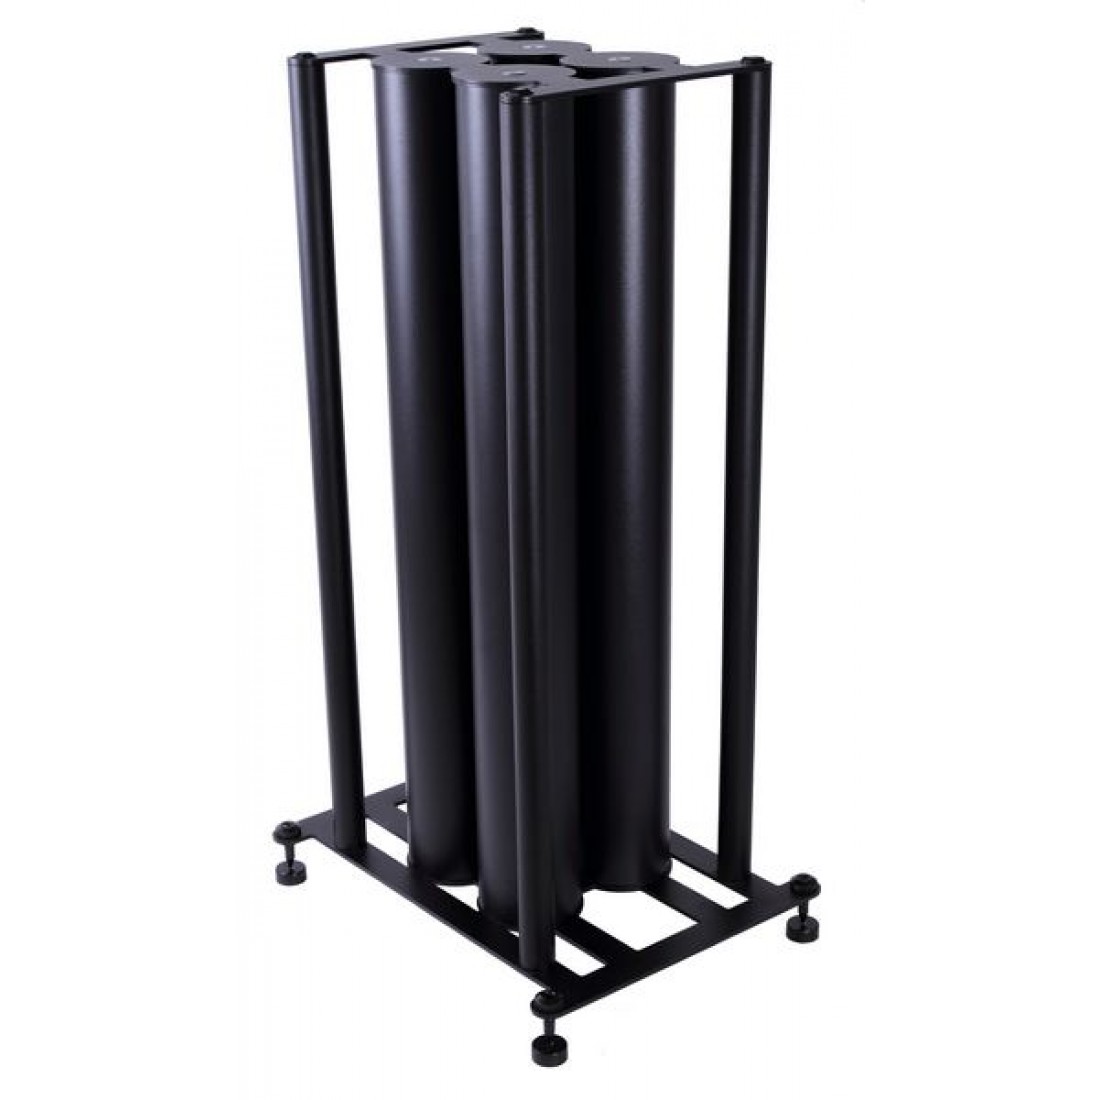 Custom Design FS 108 Speaker Stands with Black Satellite Columns